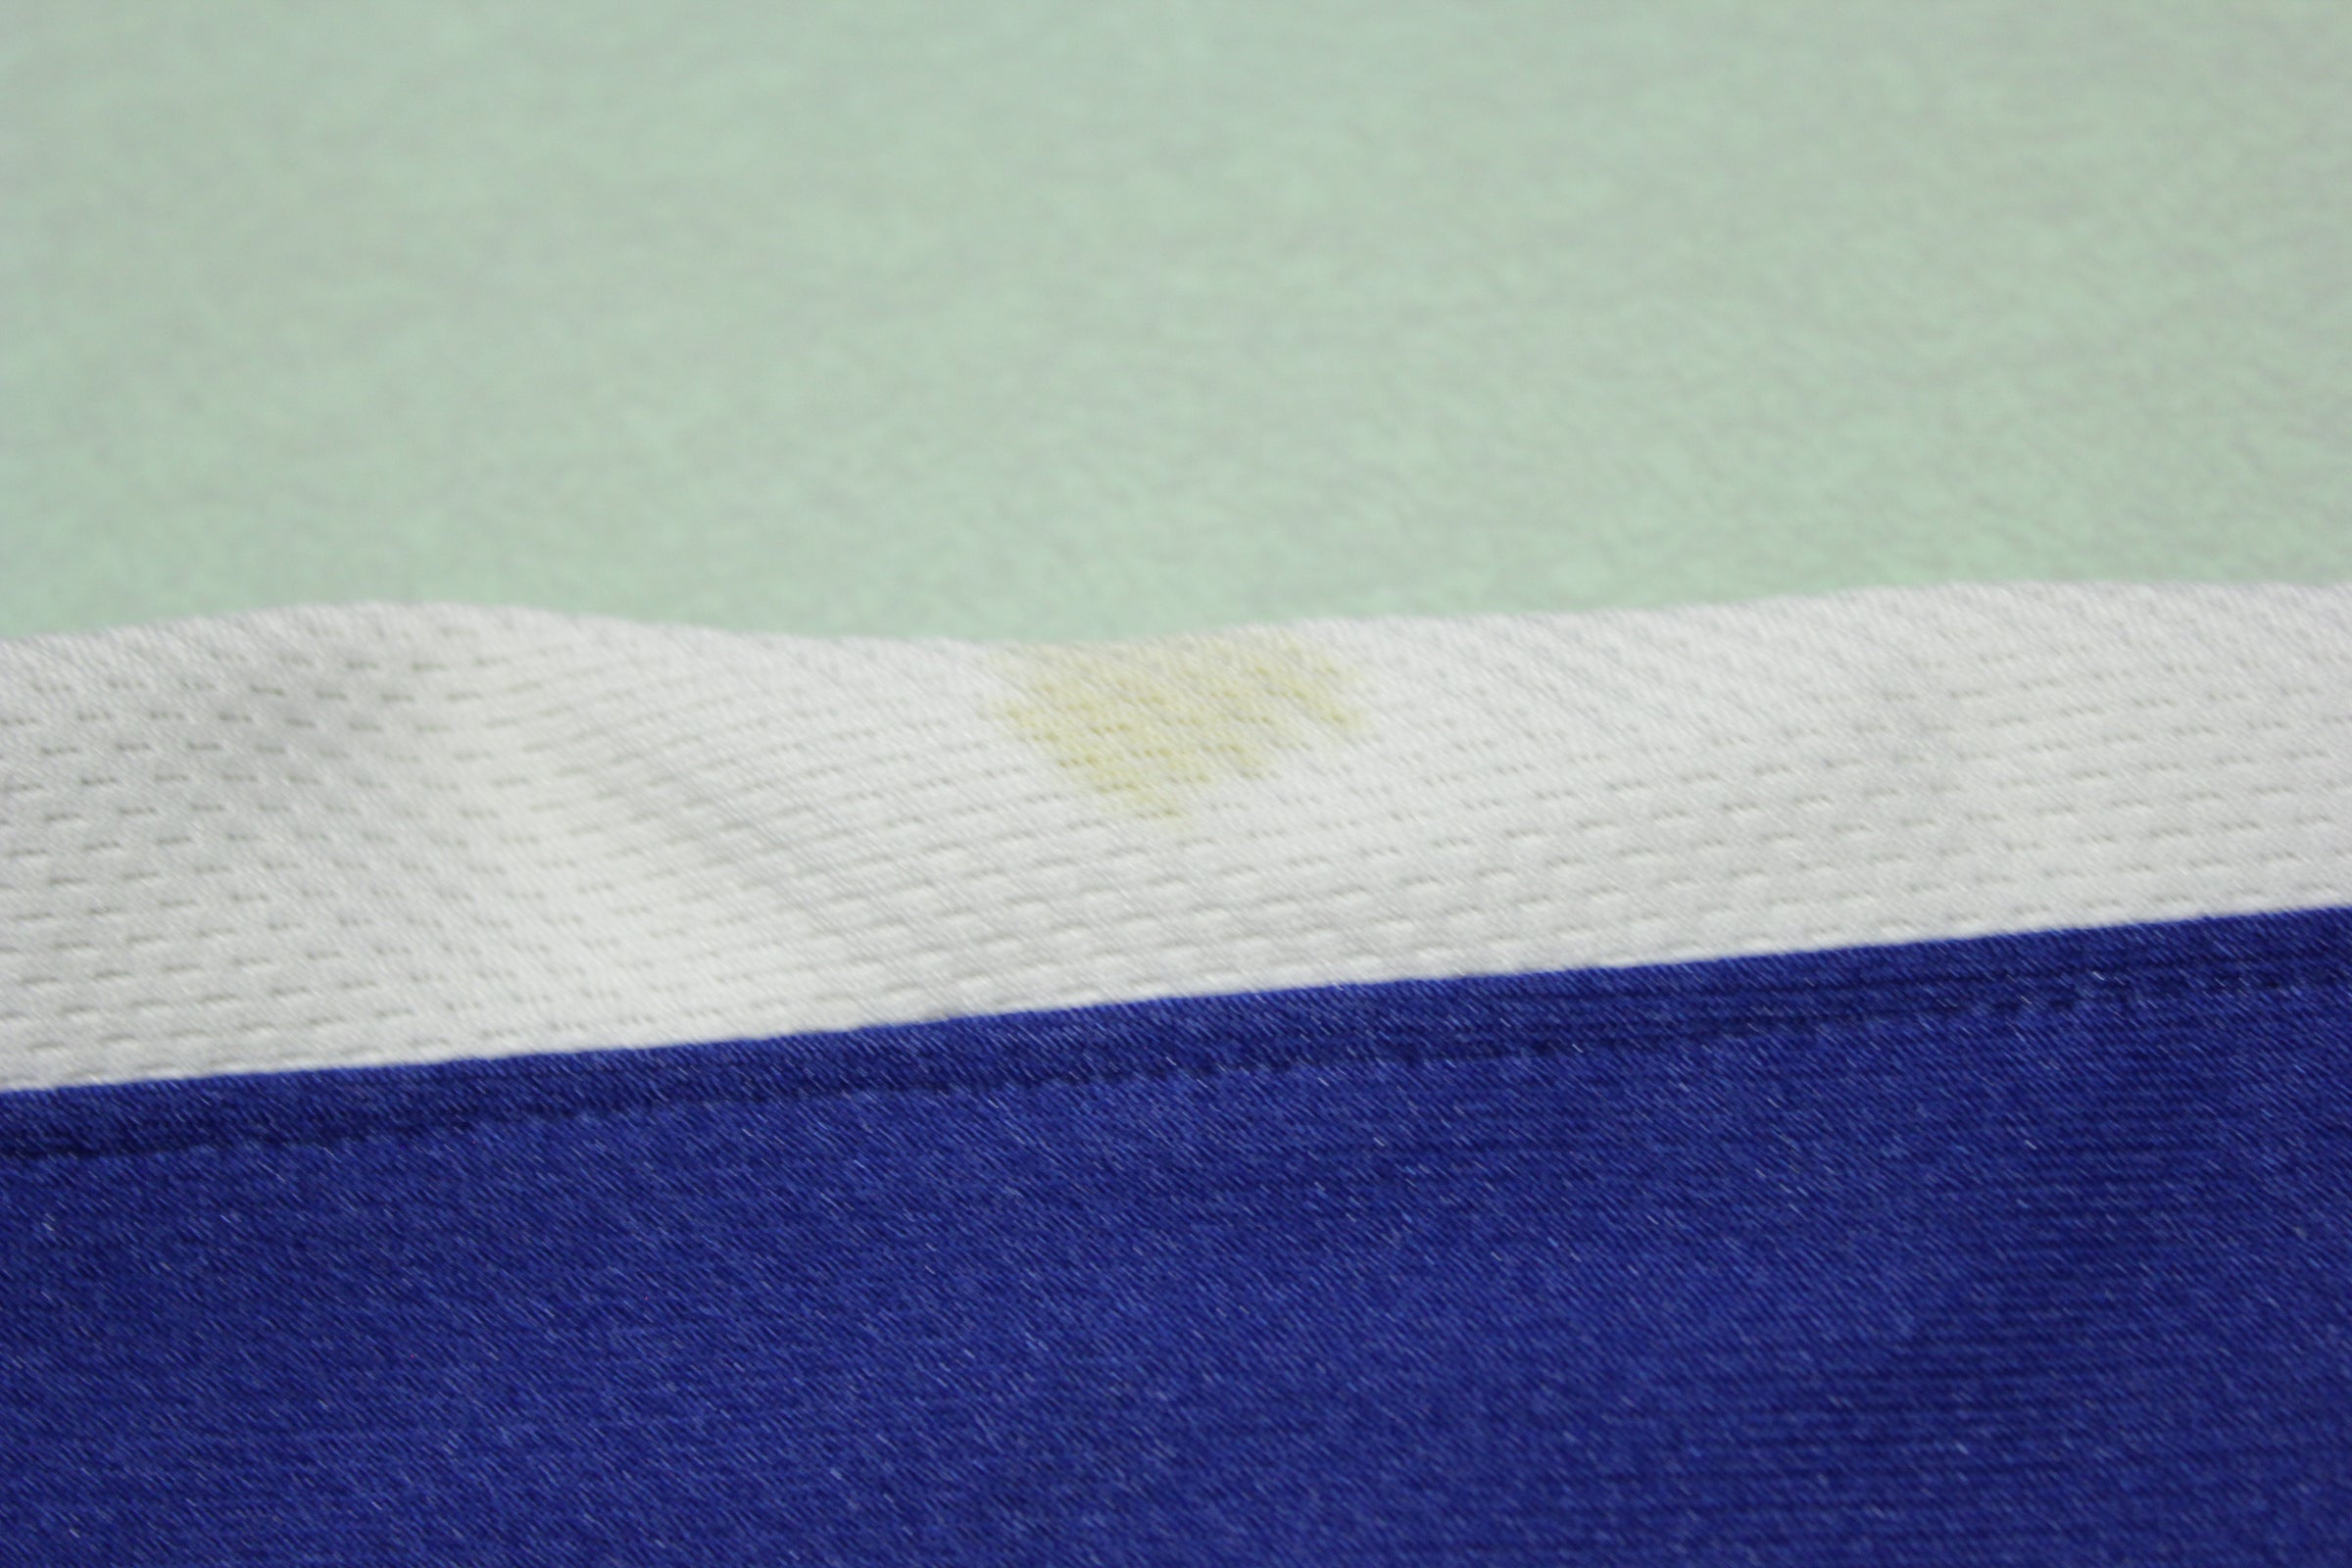 LA Dodgers Nike Team Genuine Merchandise Button Up Embroidered Swoosh –  thefuzzyfelt